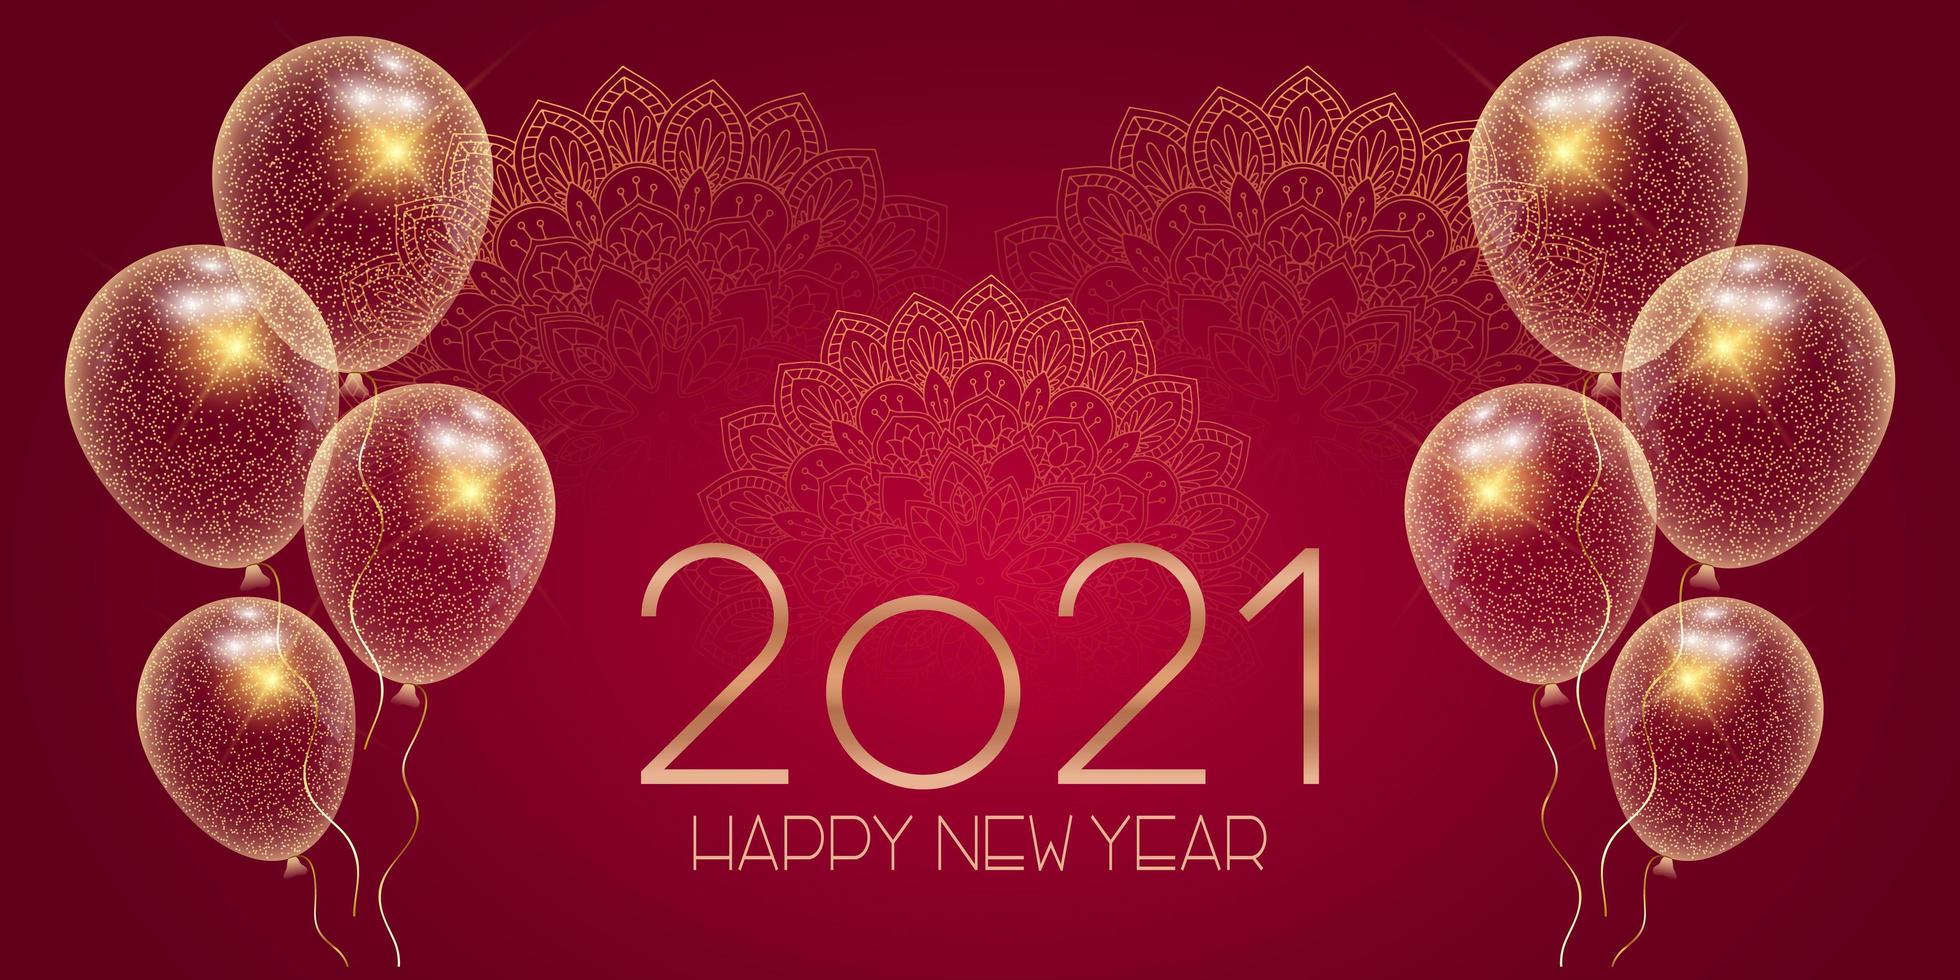 Decorative Happy New Year banner design vector